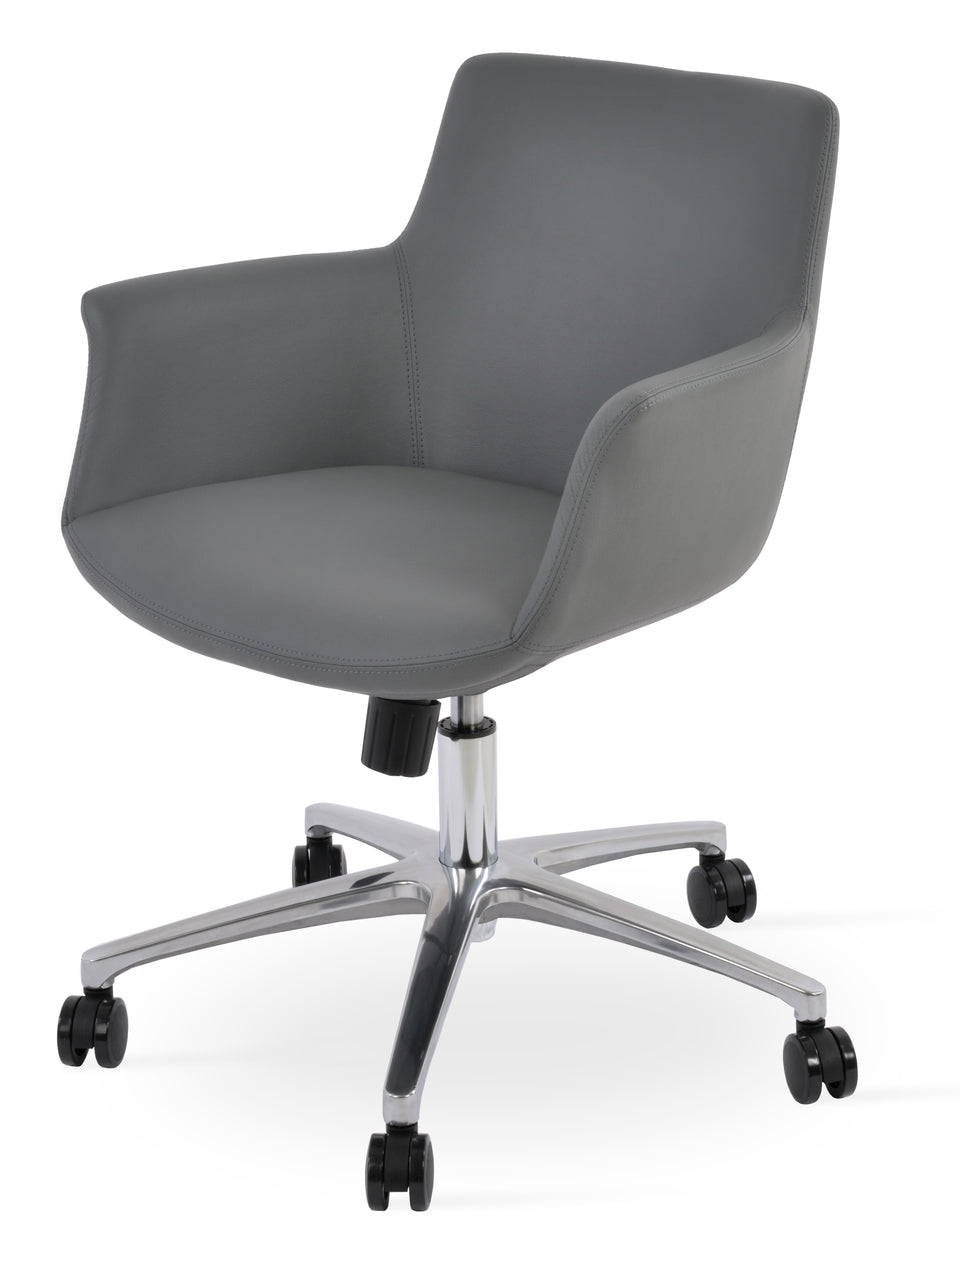 Bottega Arm Office Chair.